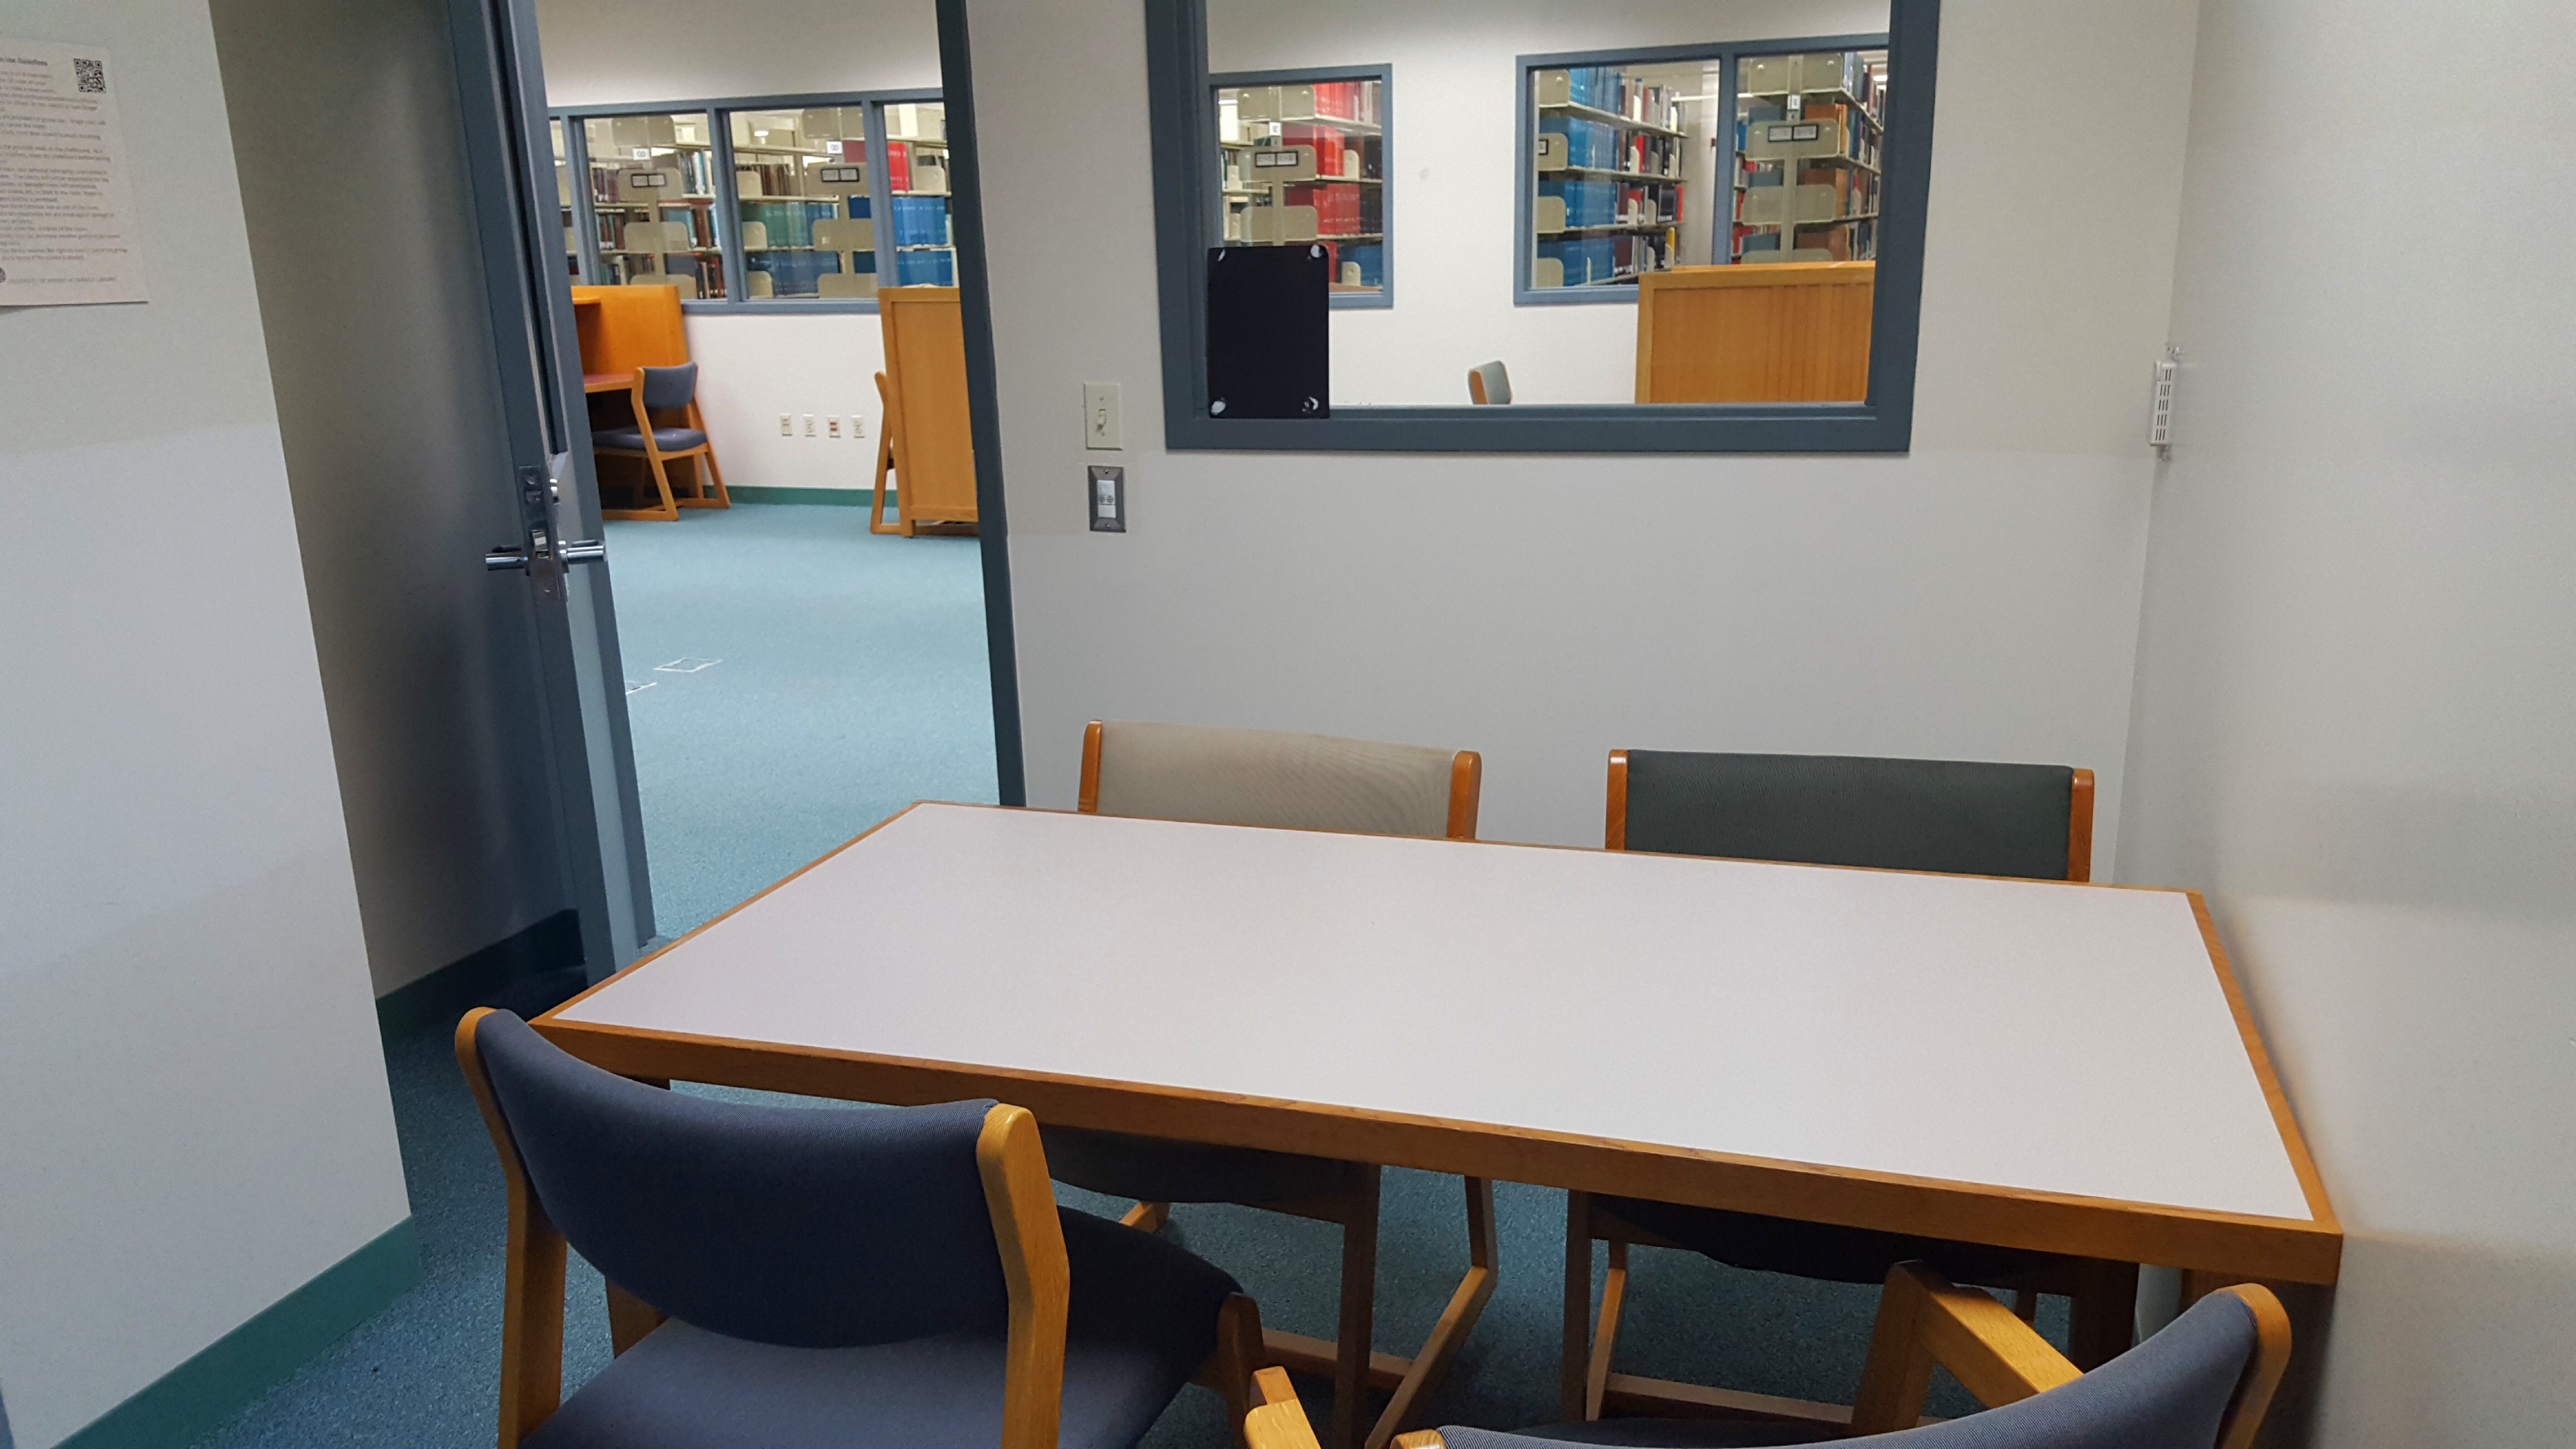 Hamilton Library Group Study Room